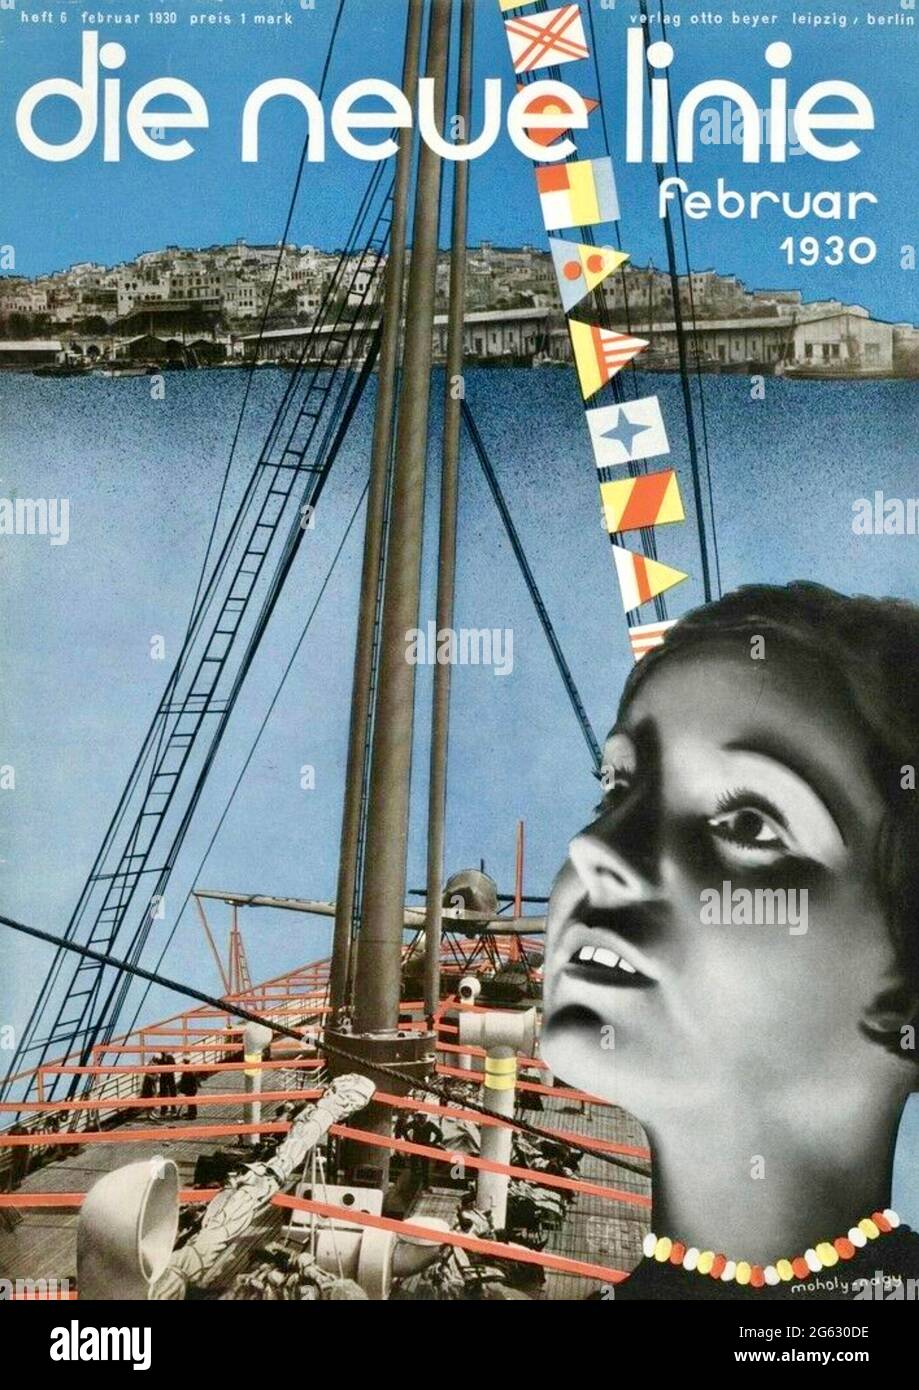 László Moholy-Nagy magazine cover artwork - die neue linie Stock Photo